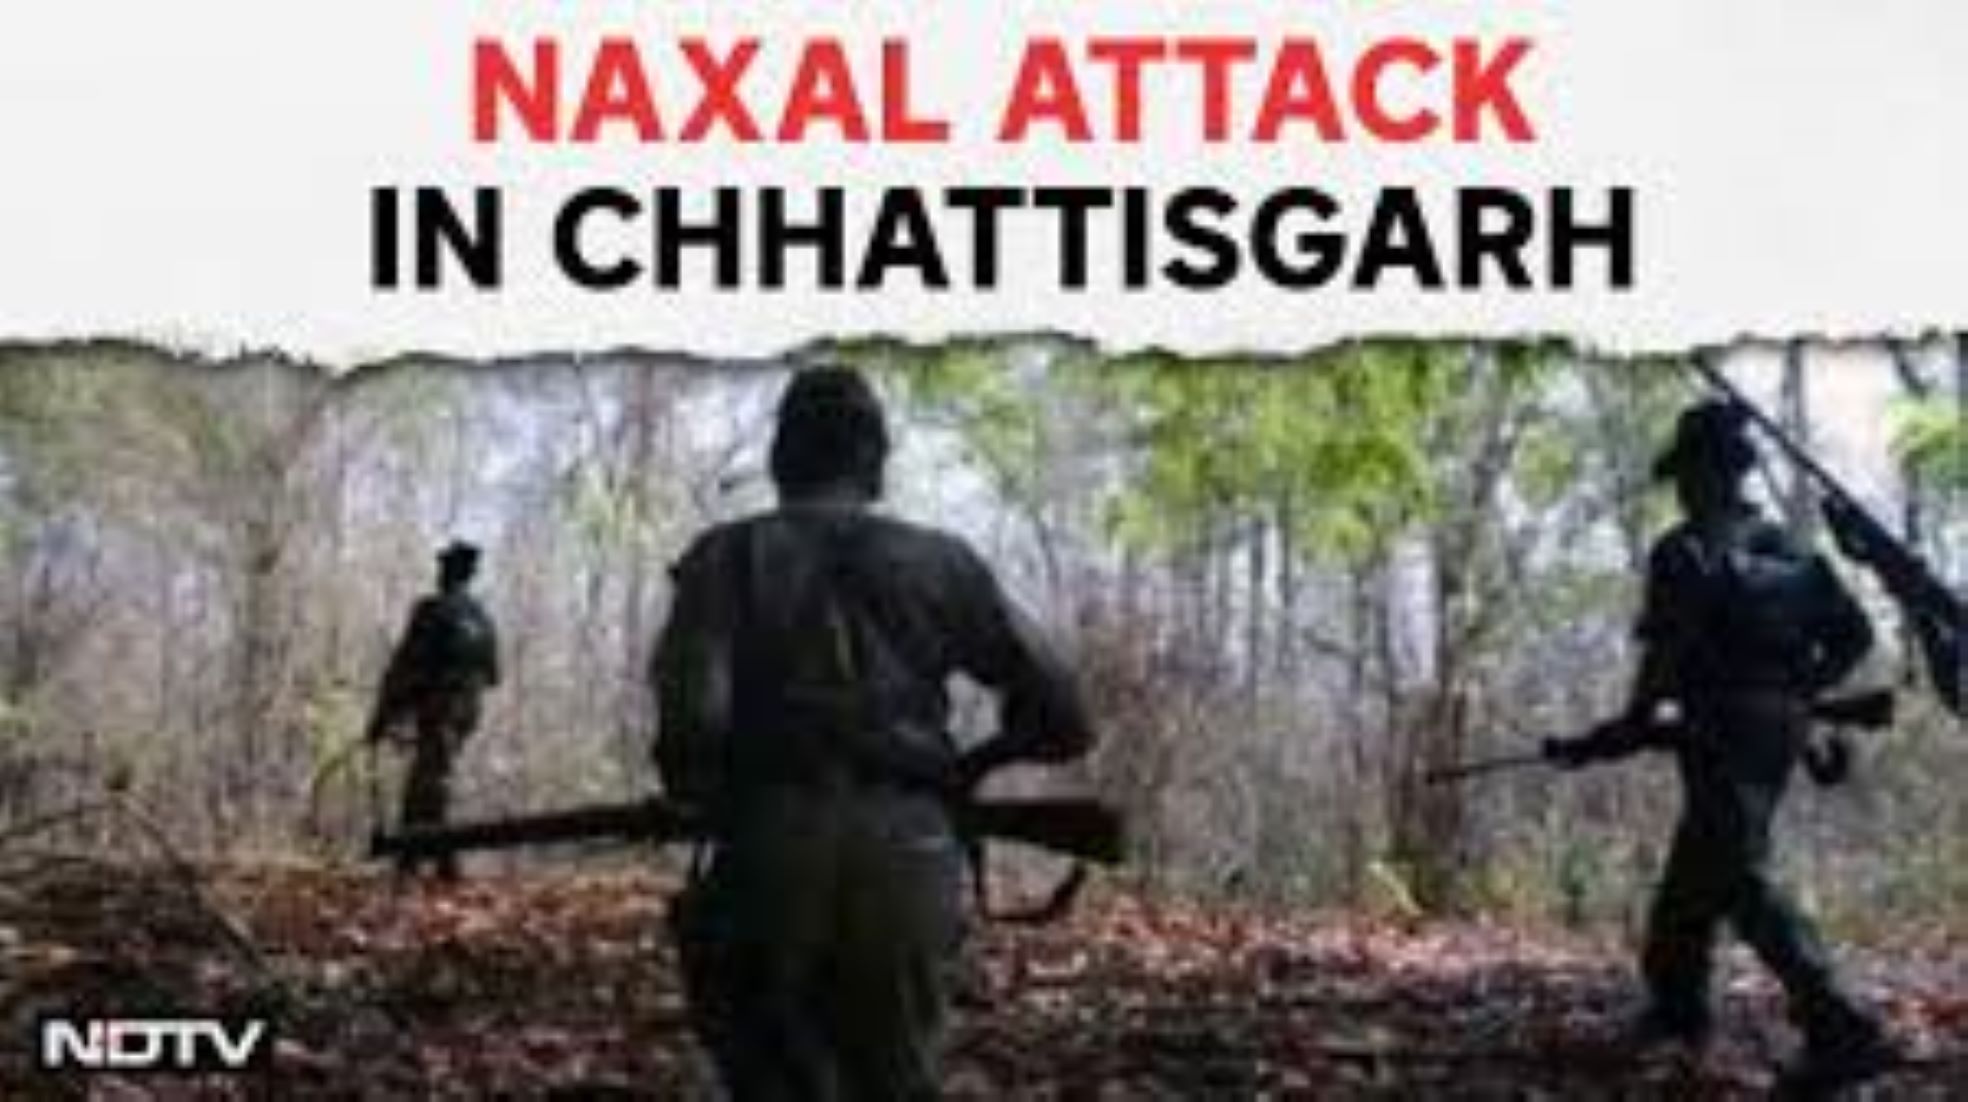 Gov’t Forces Killed 12 Naxals In Gunfight In India’s Chhattisgarh